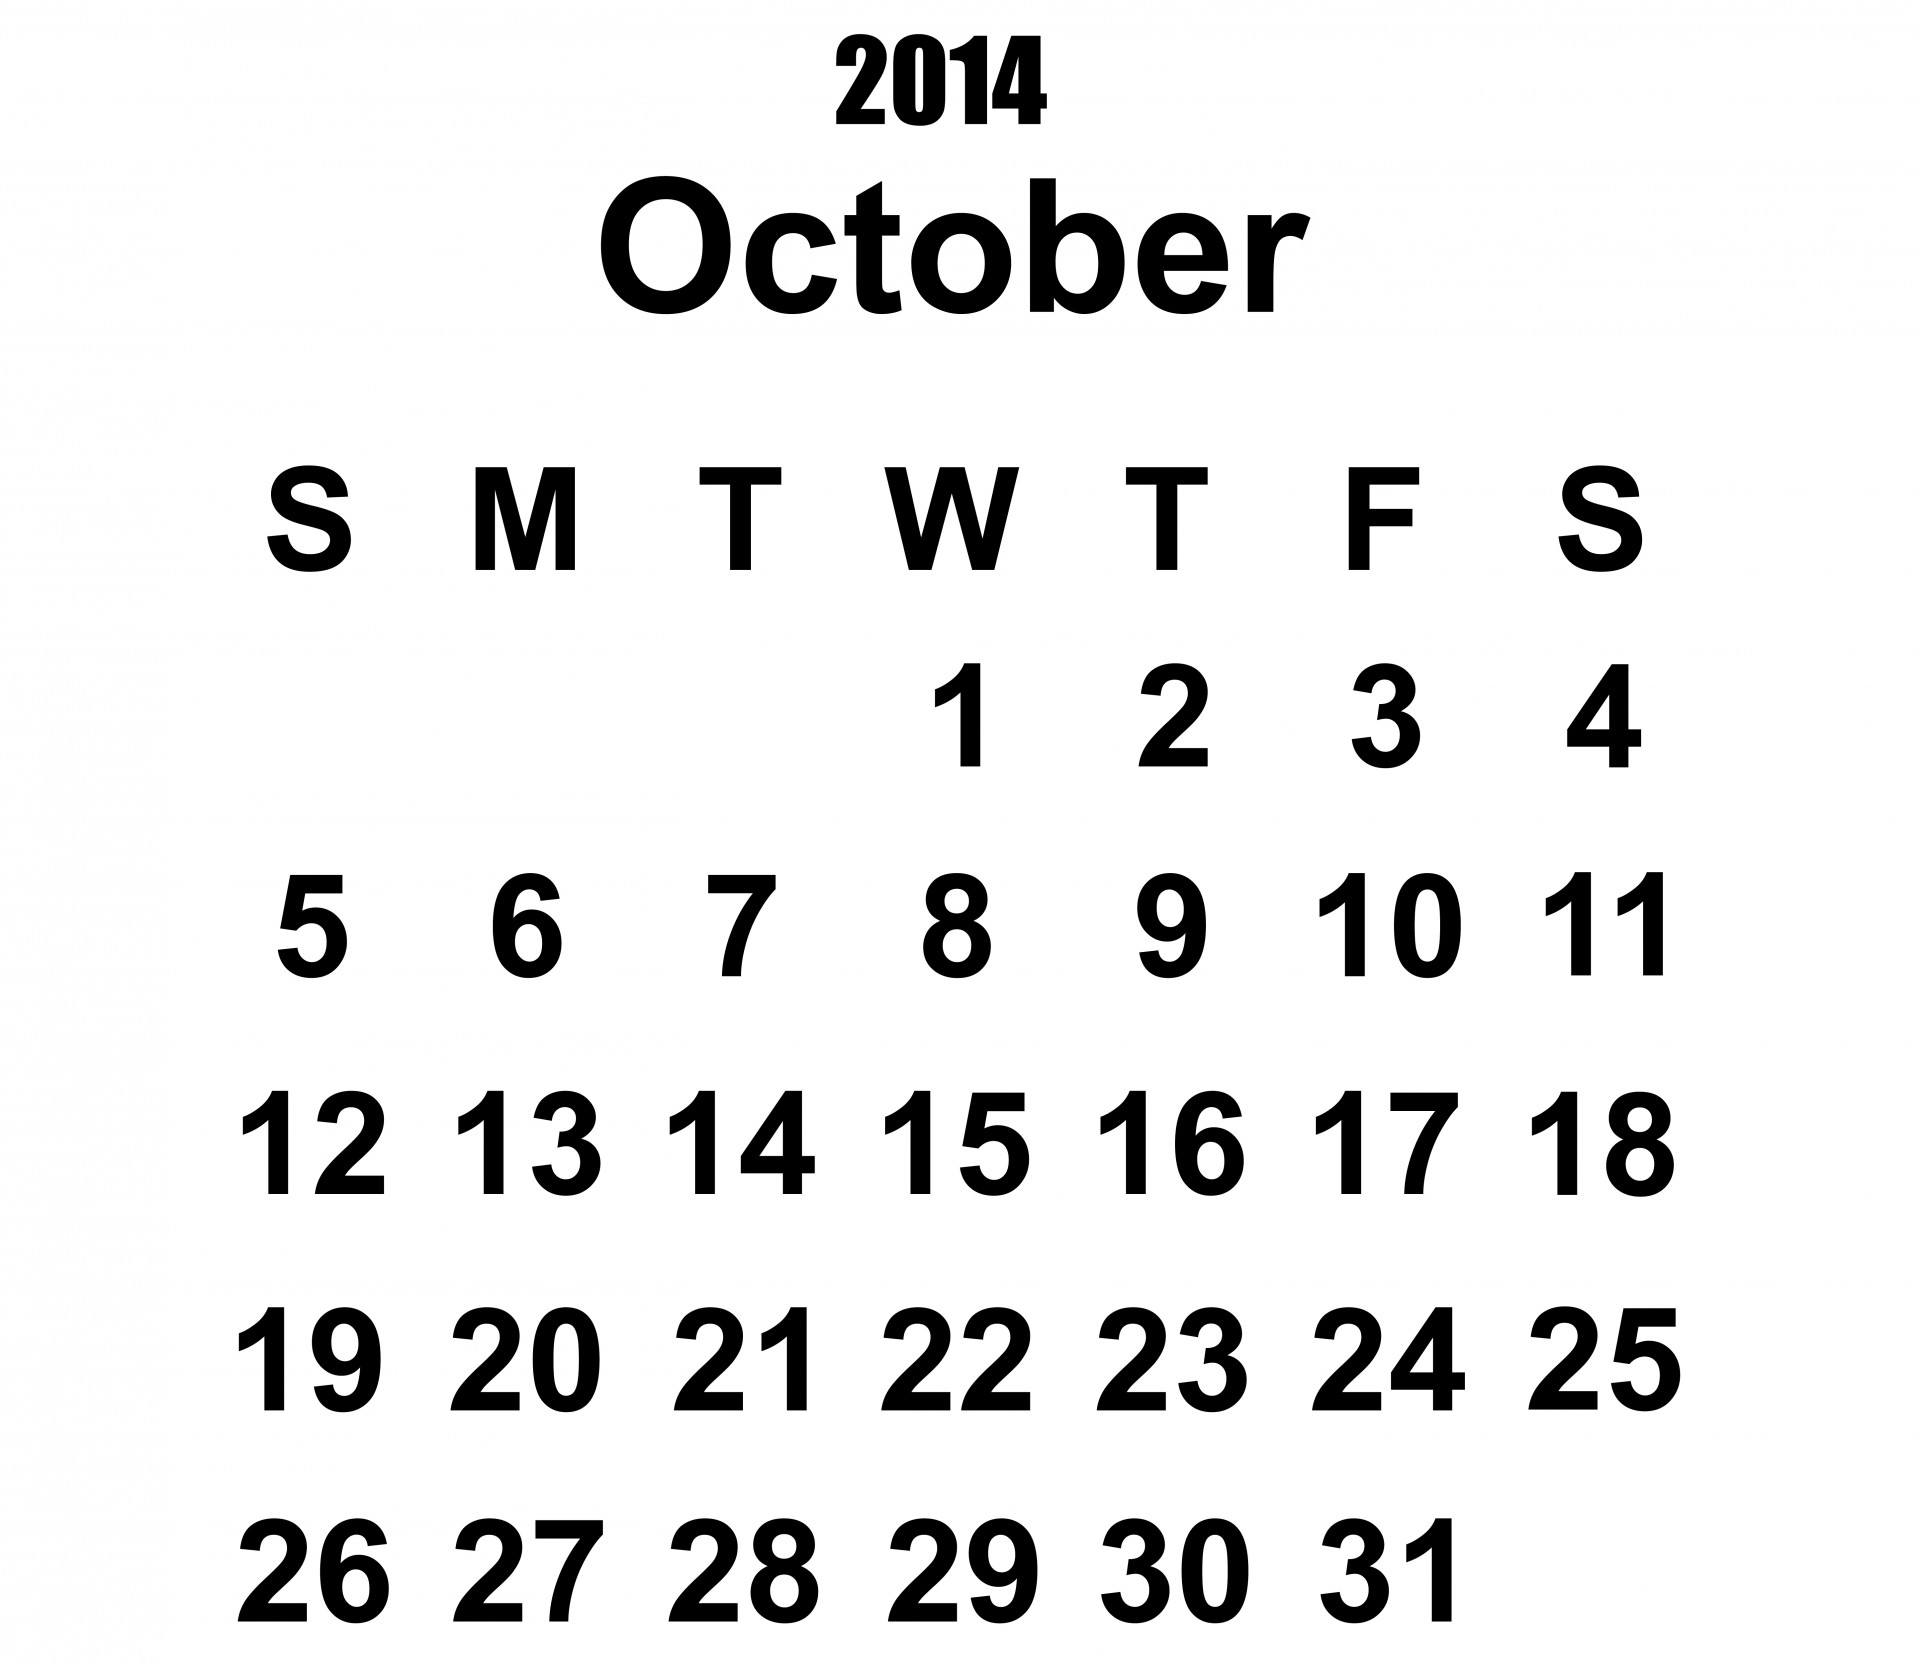 2014 calendar october 2014 calendar 2014 free photo